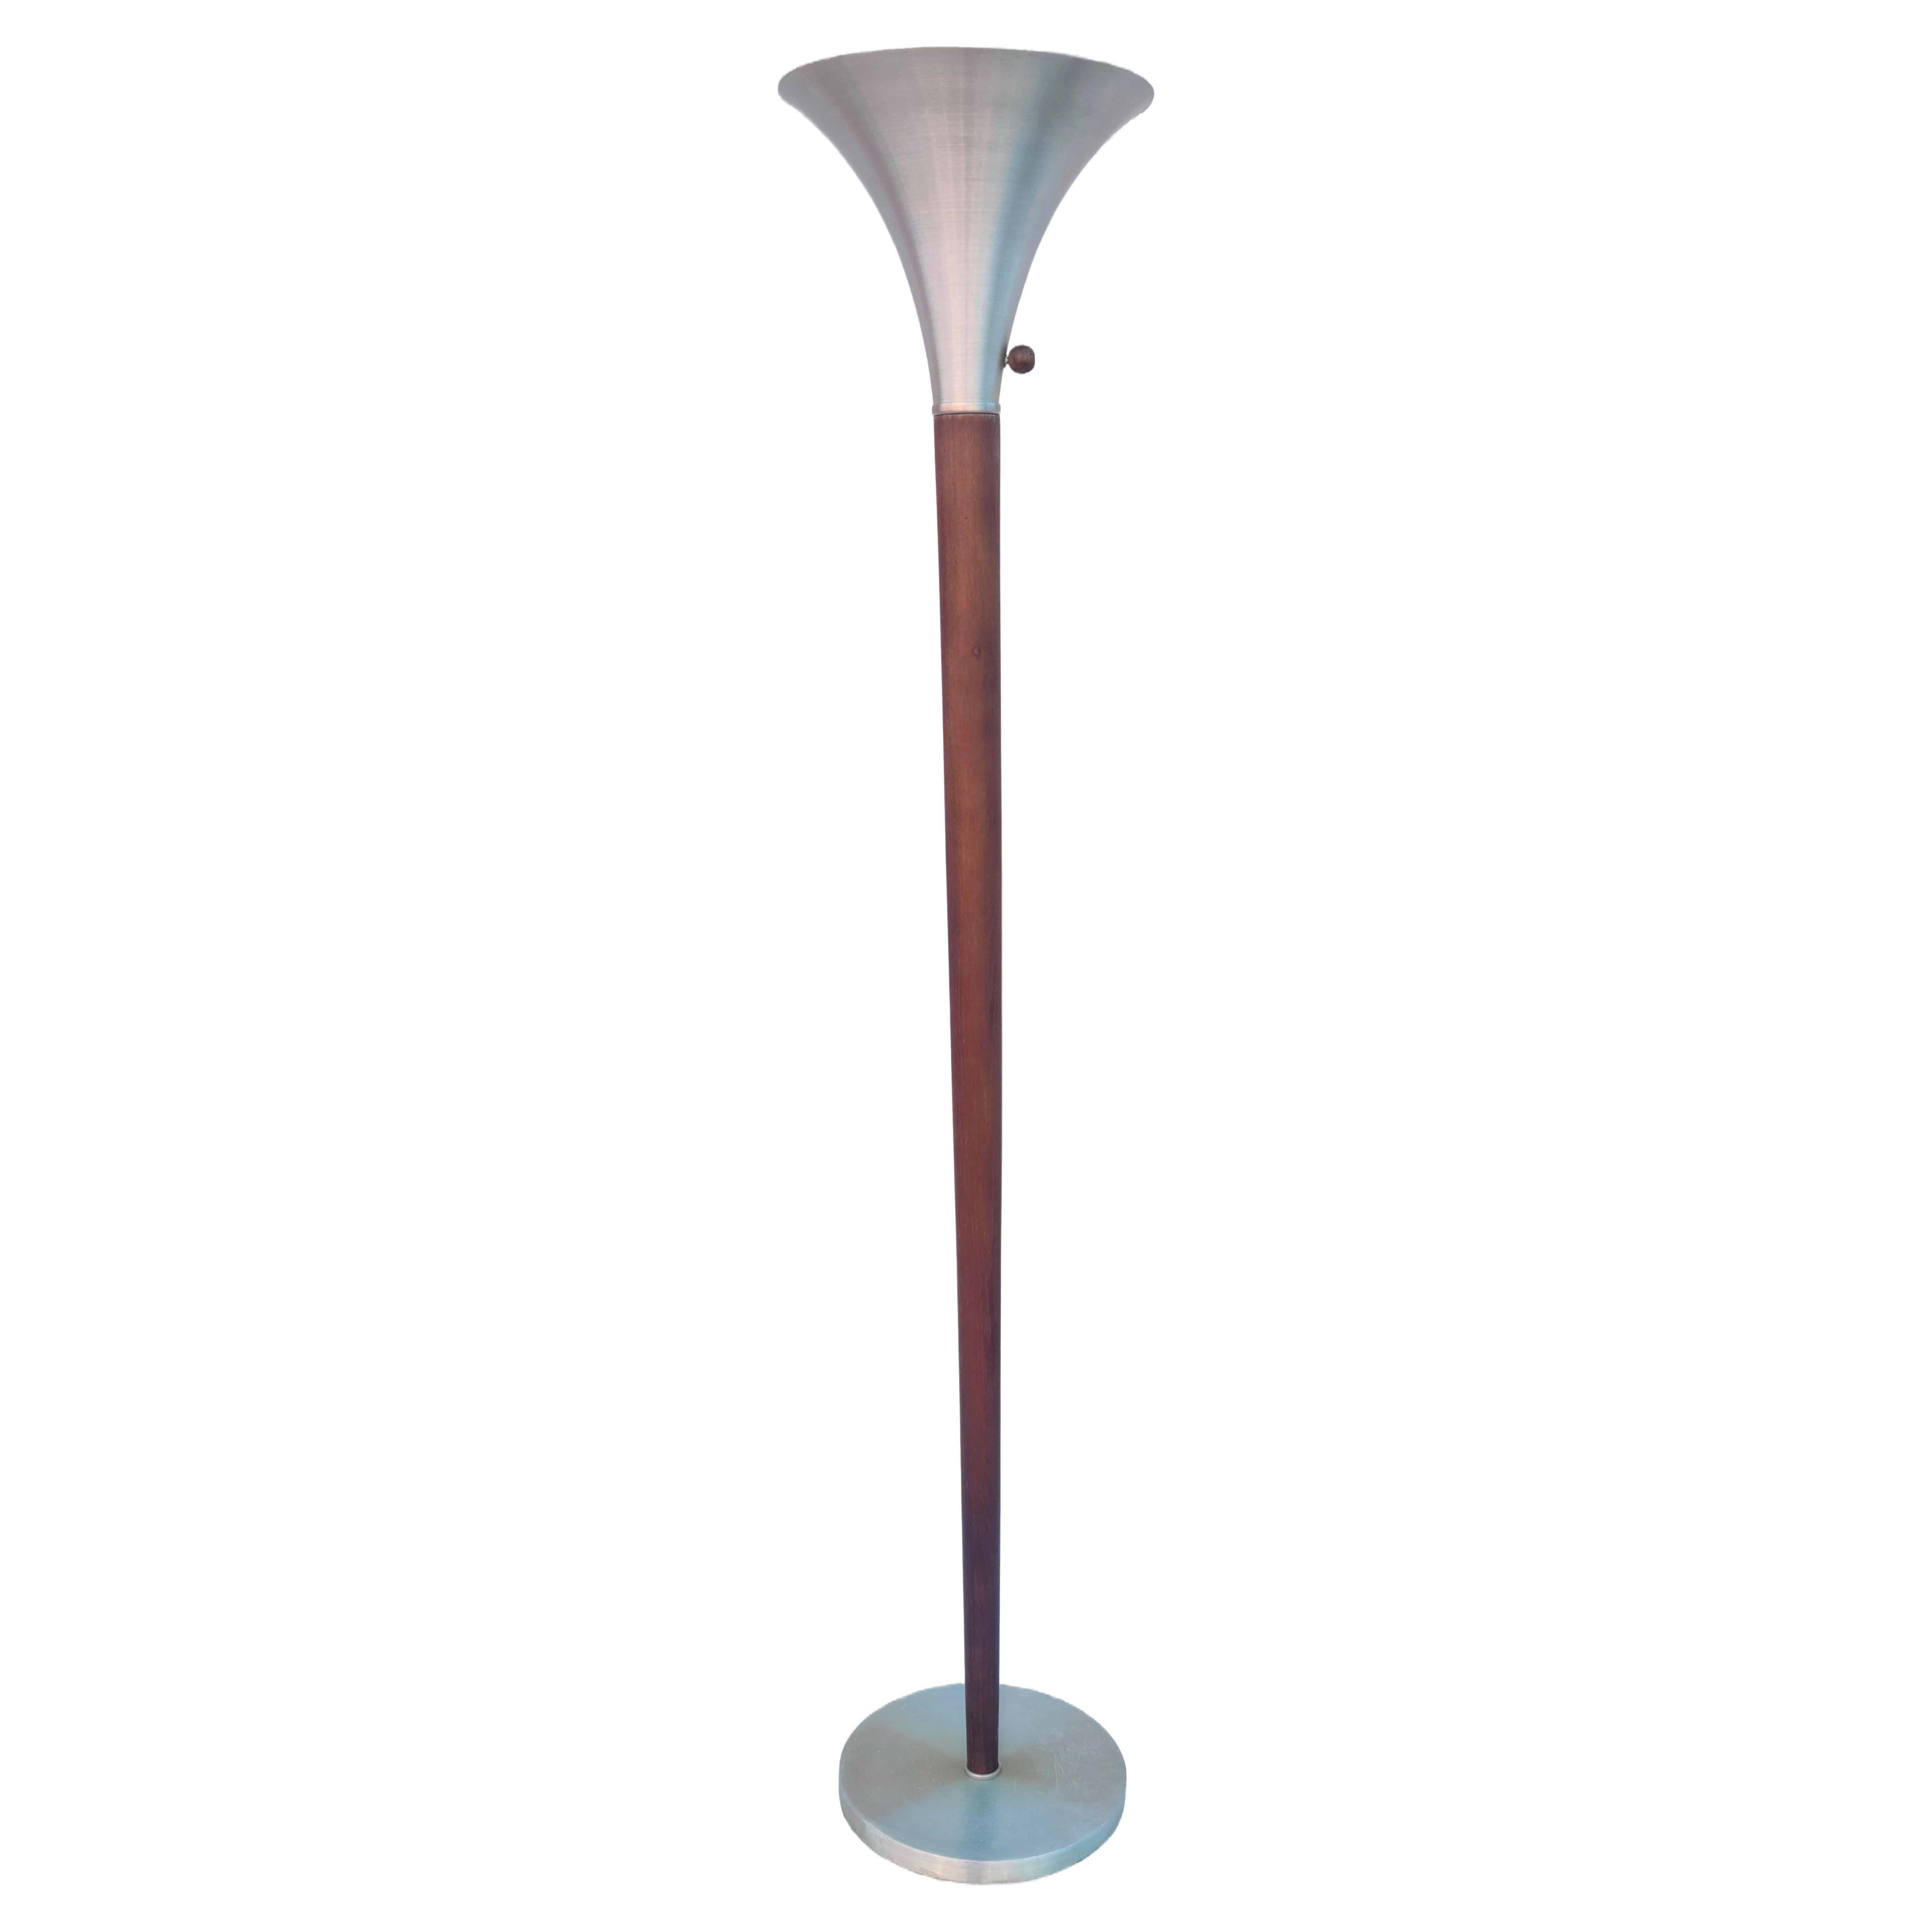 Seltene Russel Wright Stehlampe aus gesponnenem Aluminium-Eiche, Wright Accessories Inc